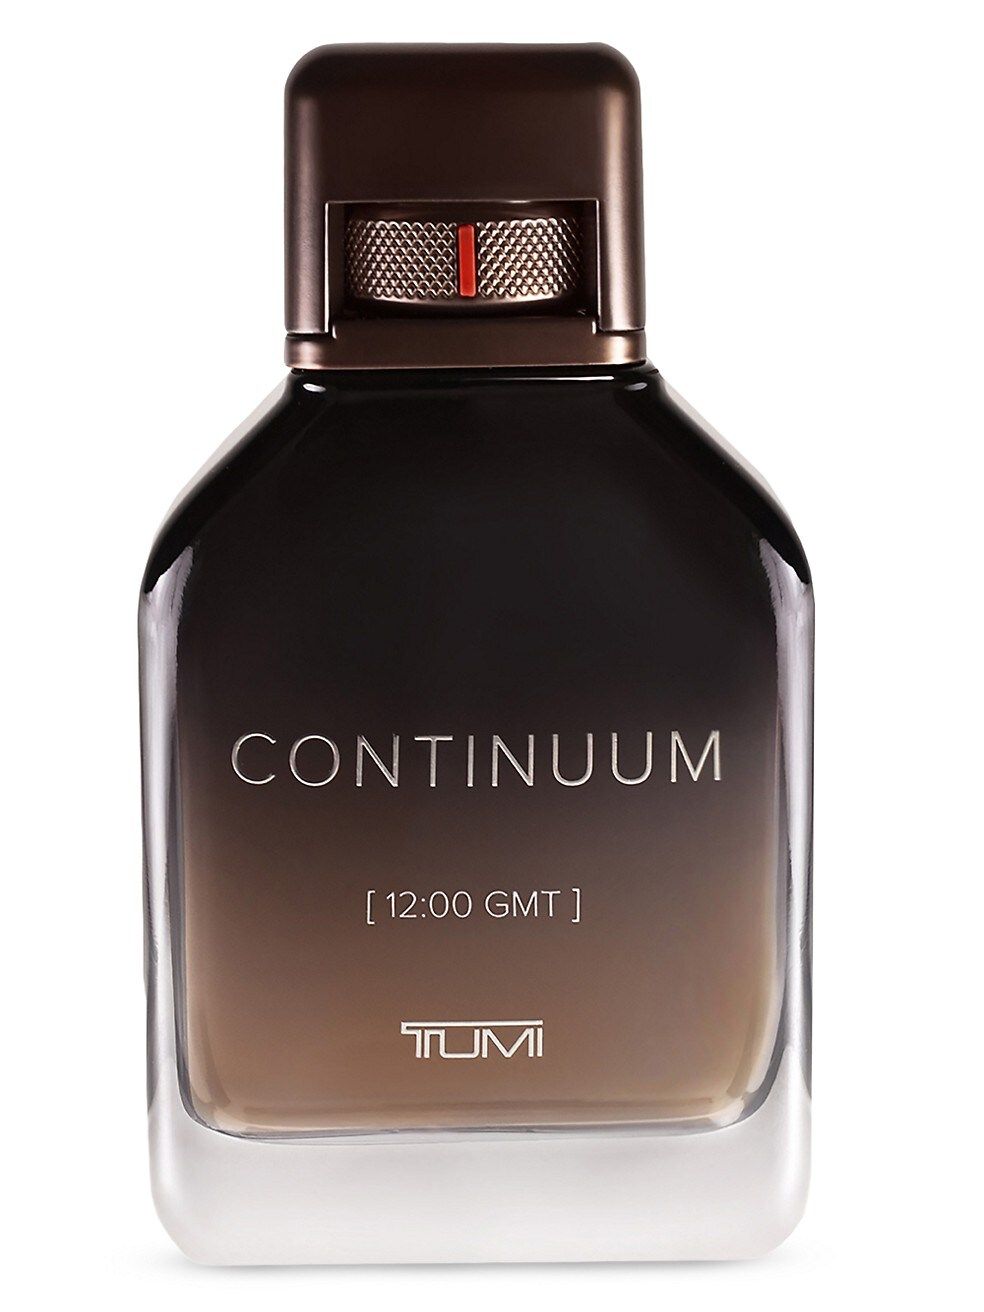 TUMI Continuum Eau de Parfum | Saks Fifth Avenue